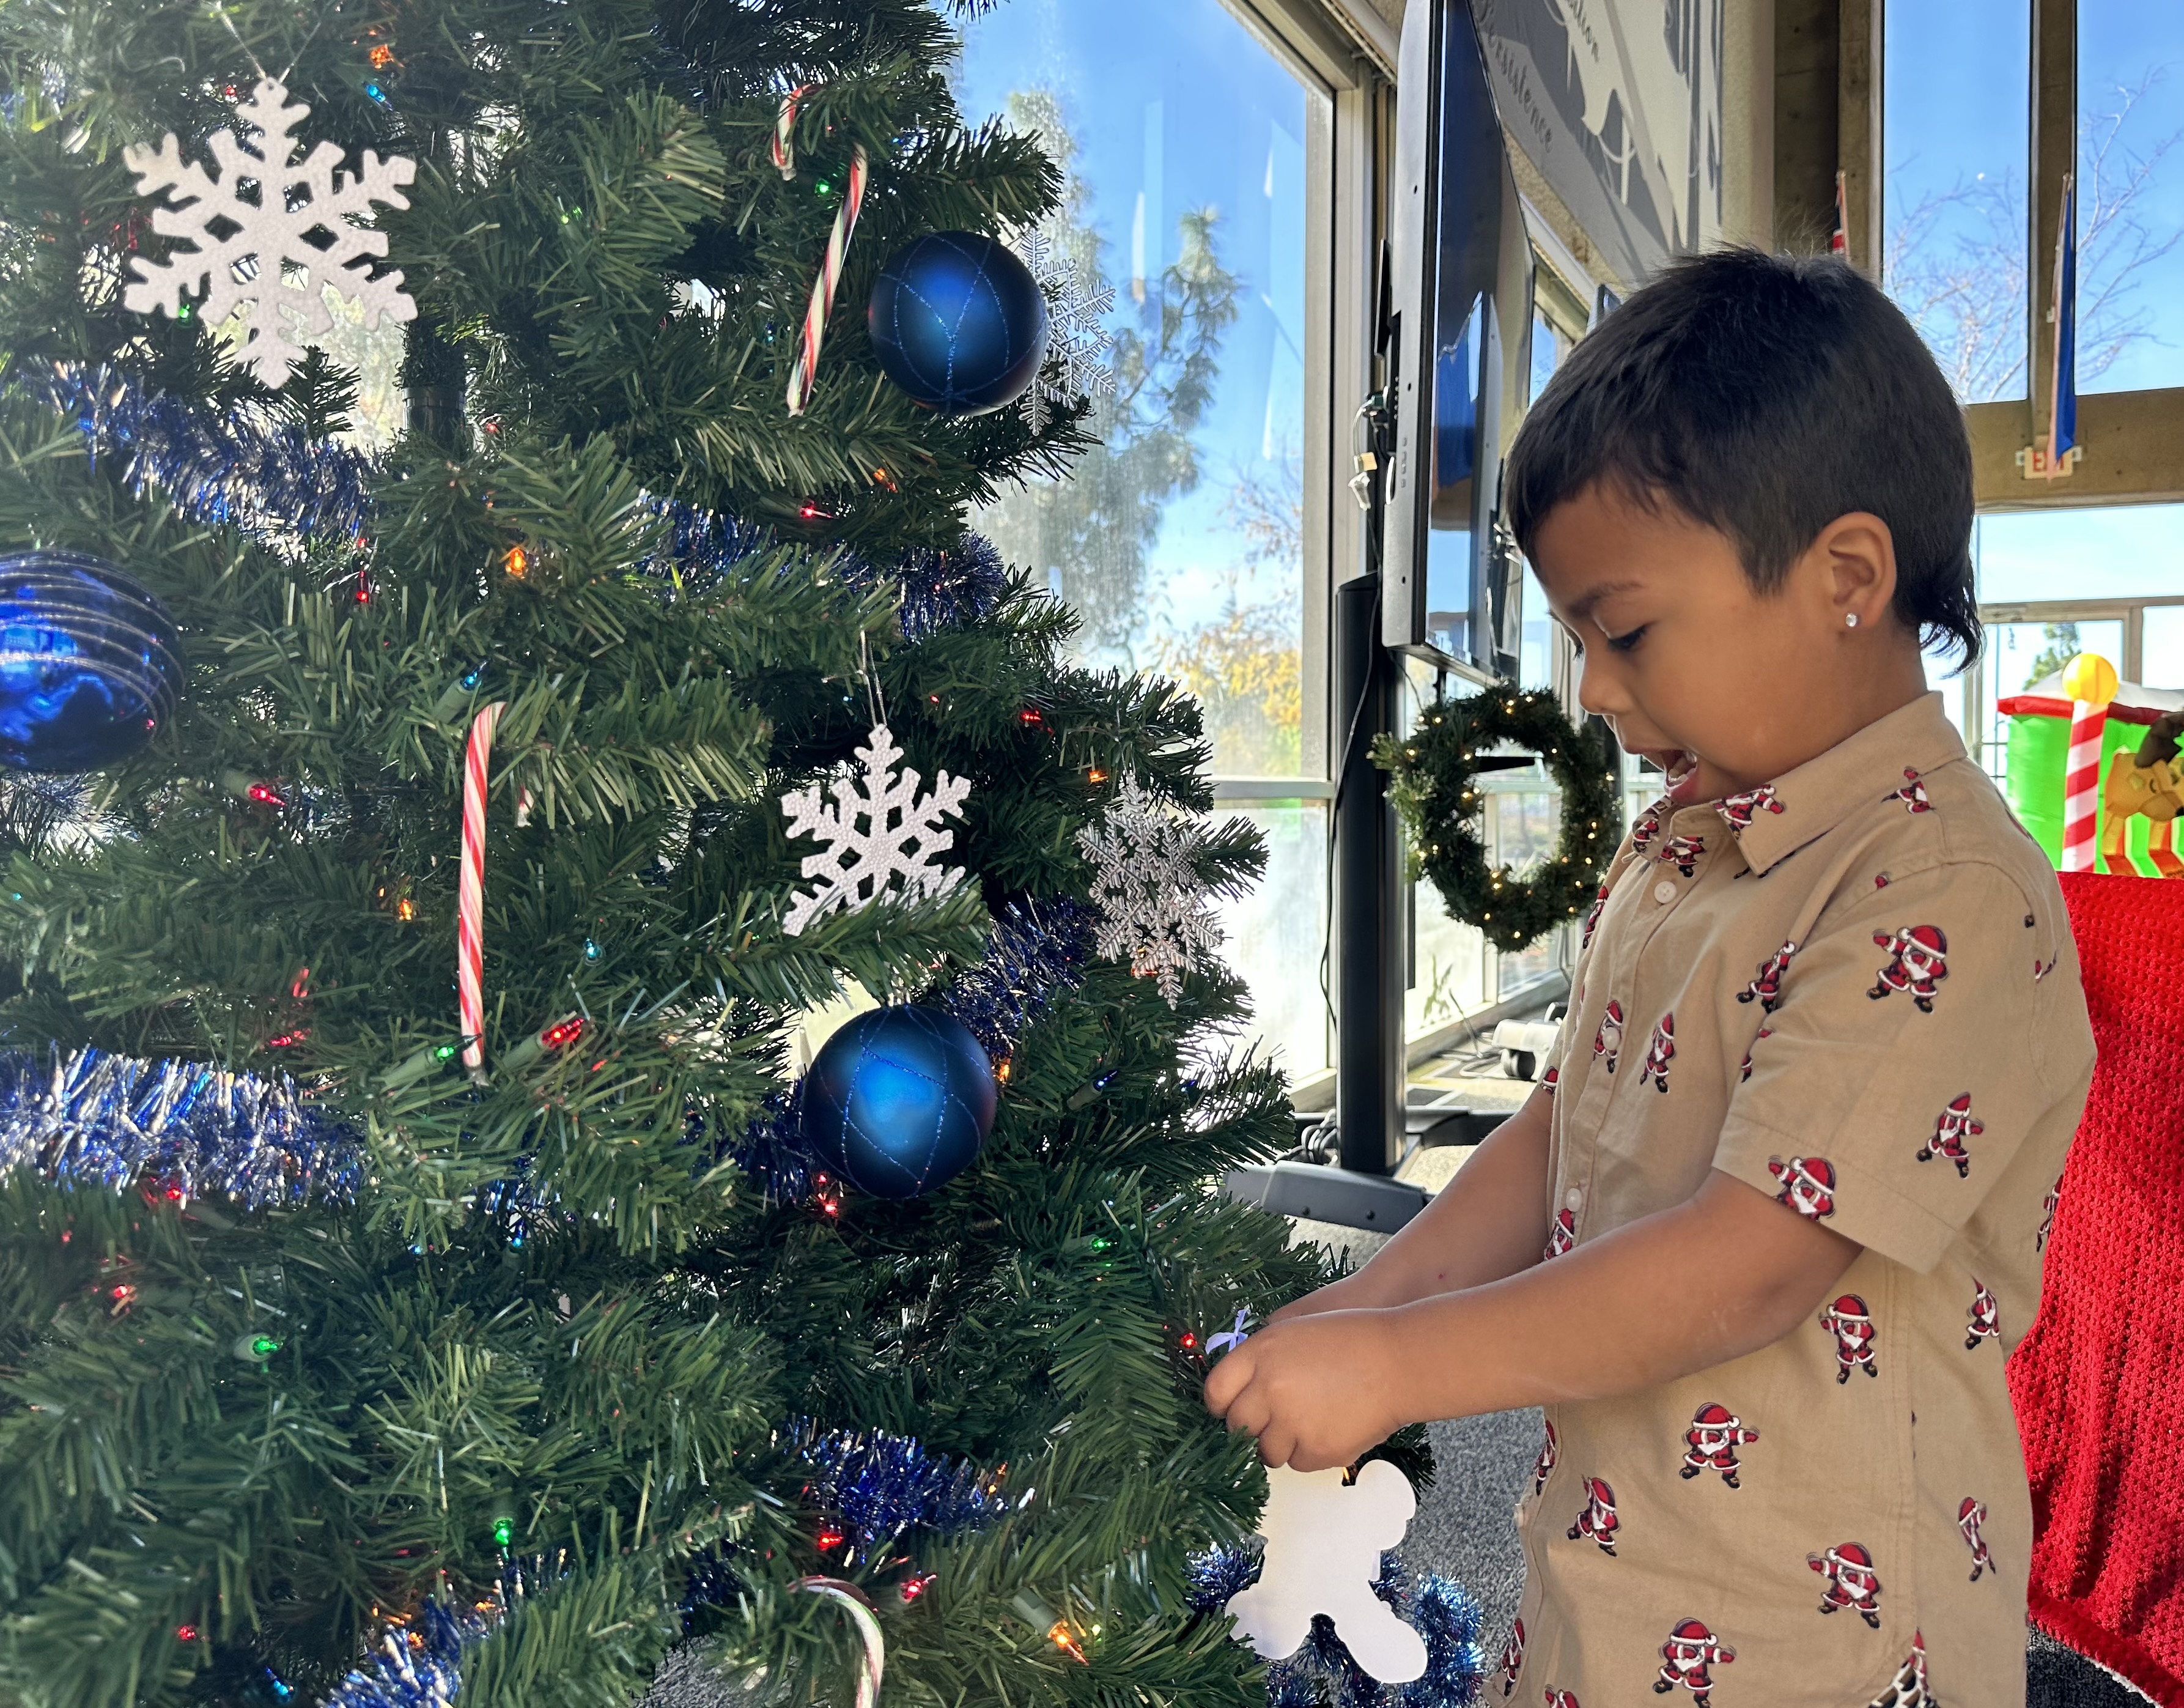 Child hangs ornament on tree.